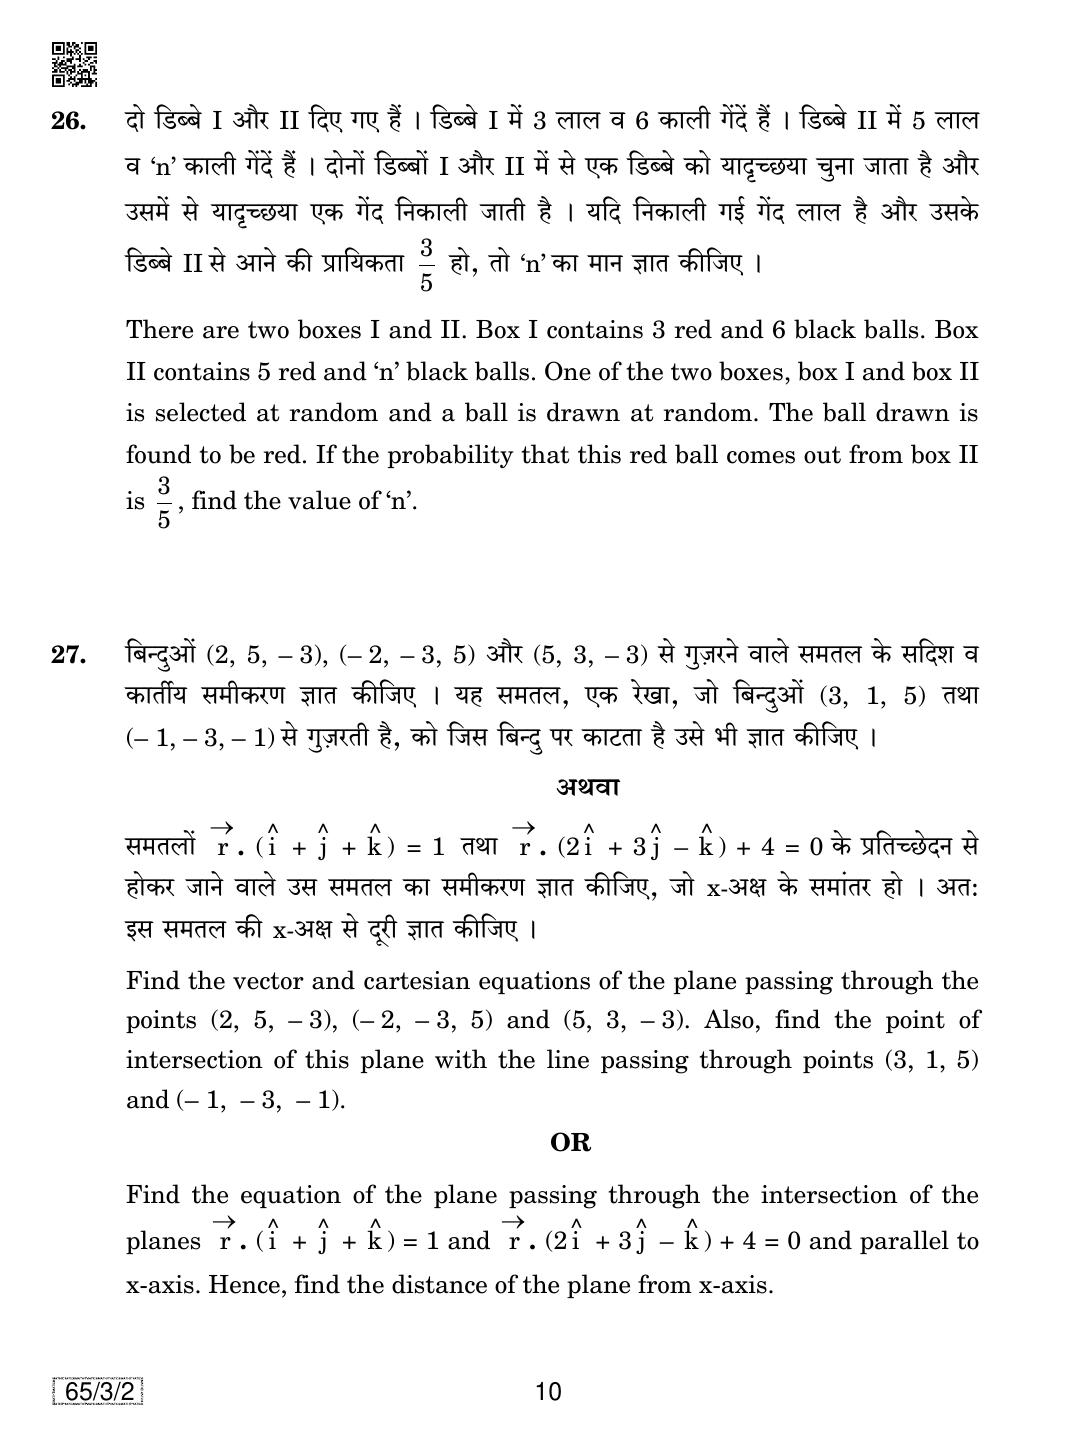 CBSE Class 12 65-3-2 Mathematics 2019 Question Paper - Page 10